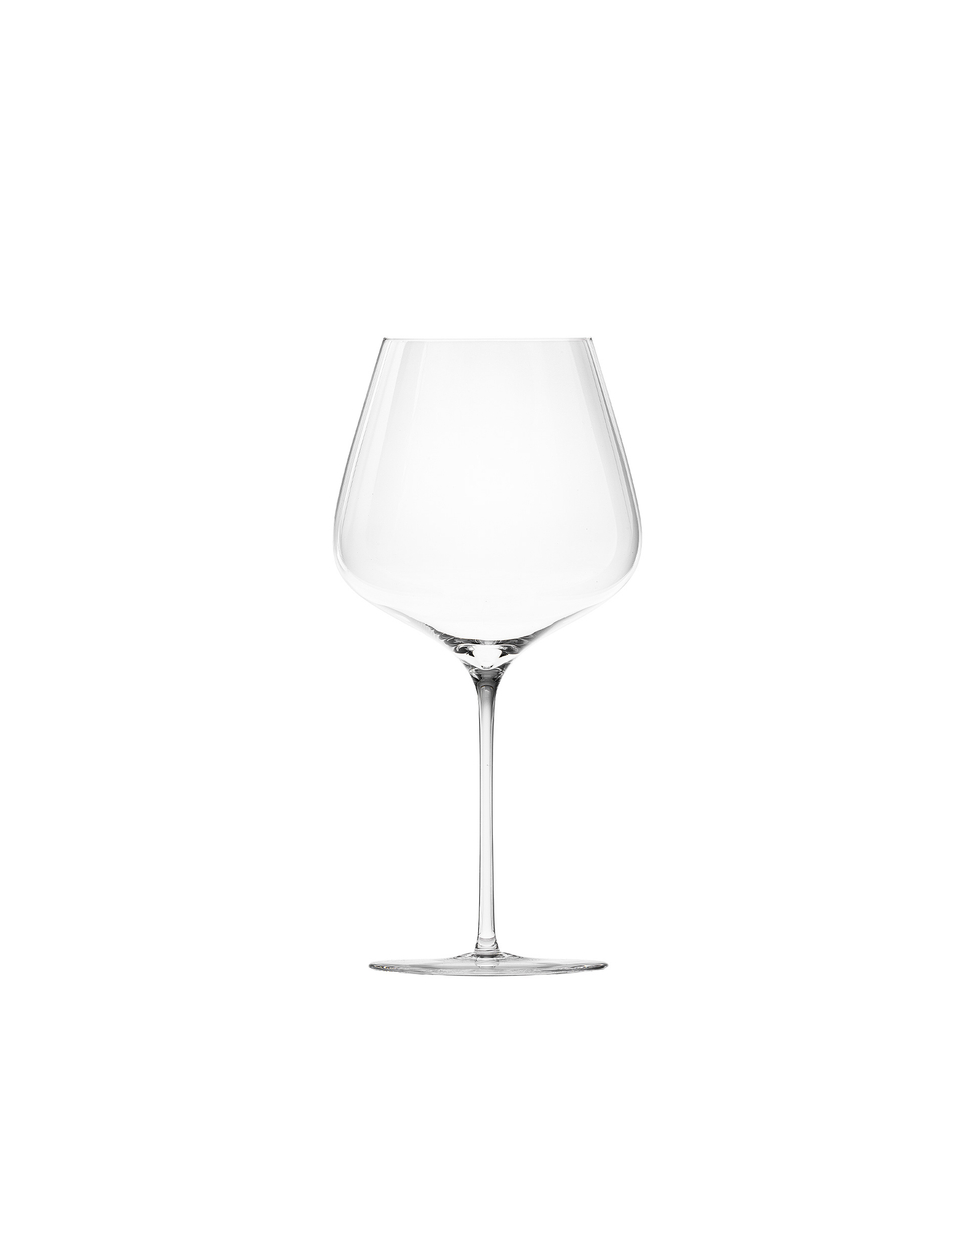 Oeno wine glass, 650 ml